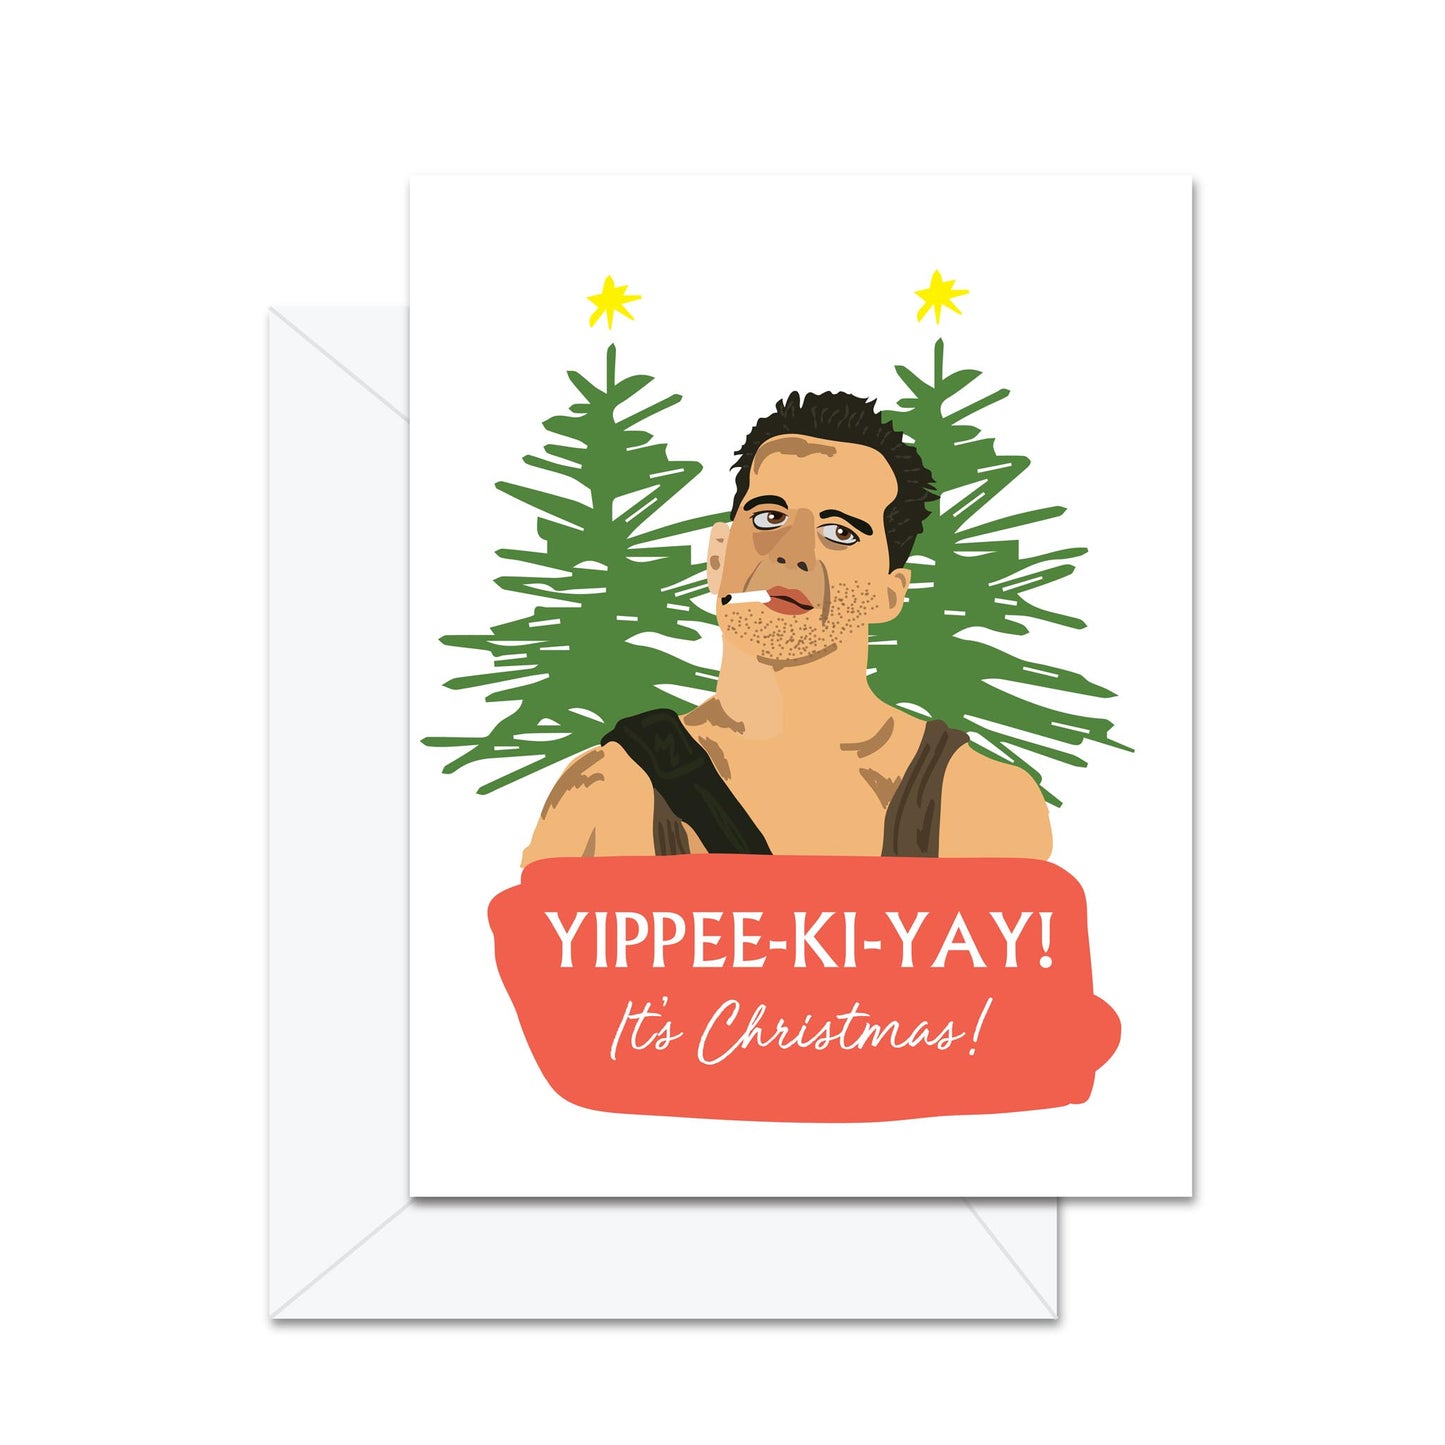 Yippee Ki Yay! It's Christmas! - Greeting Card